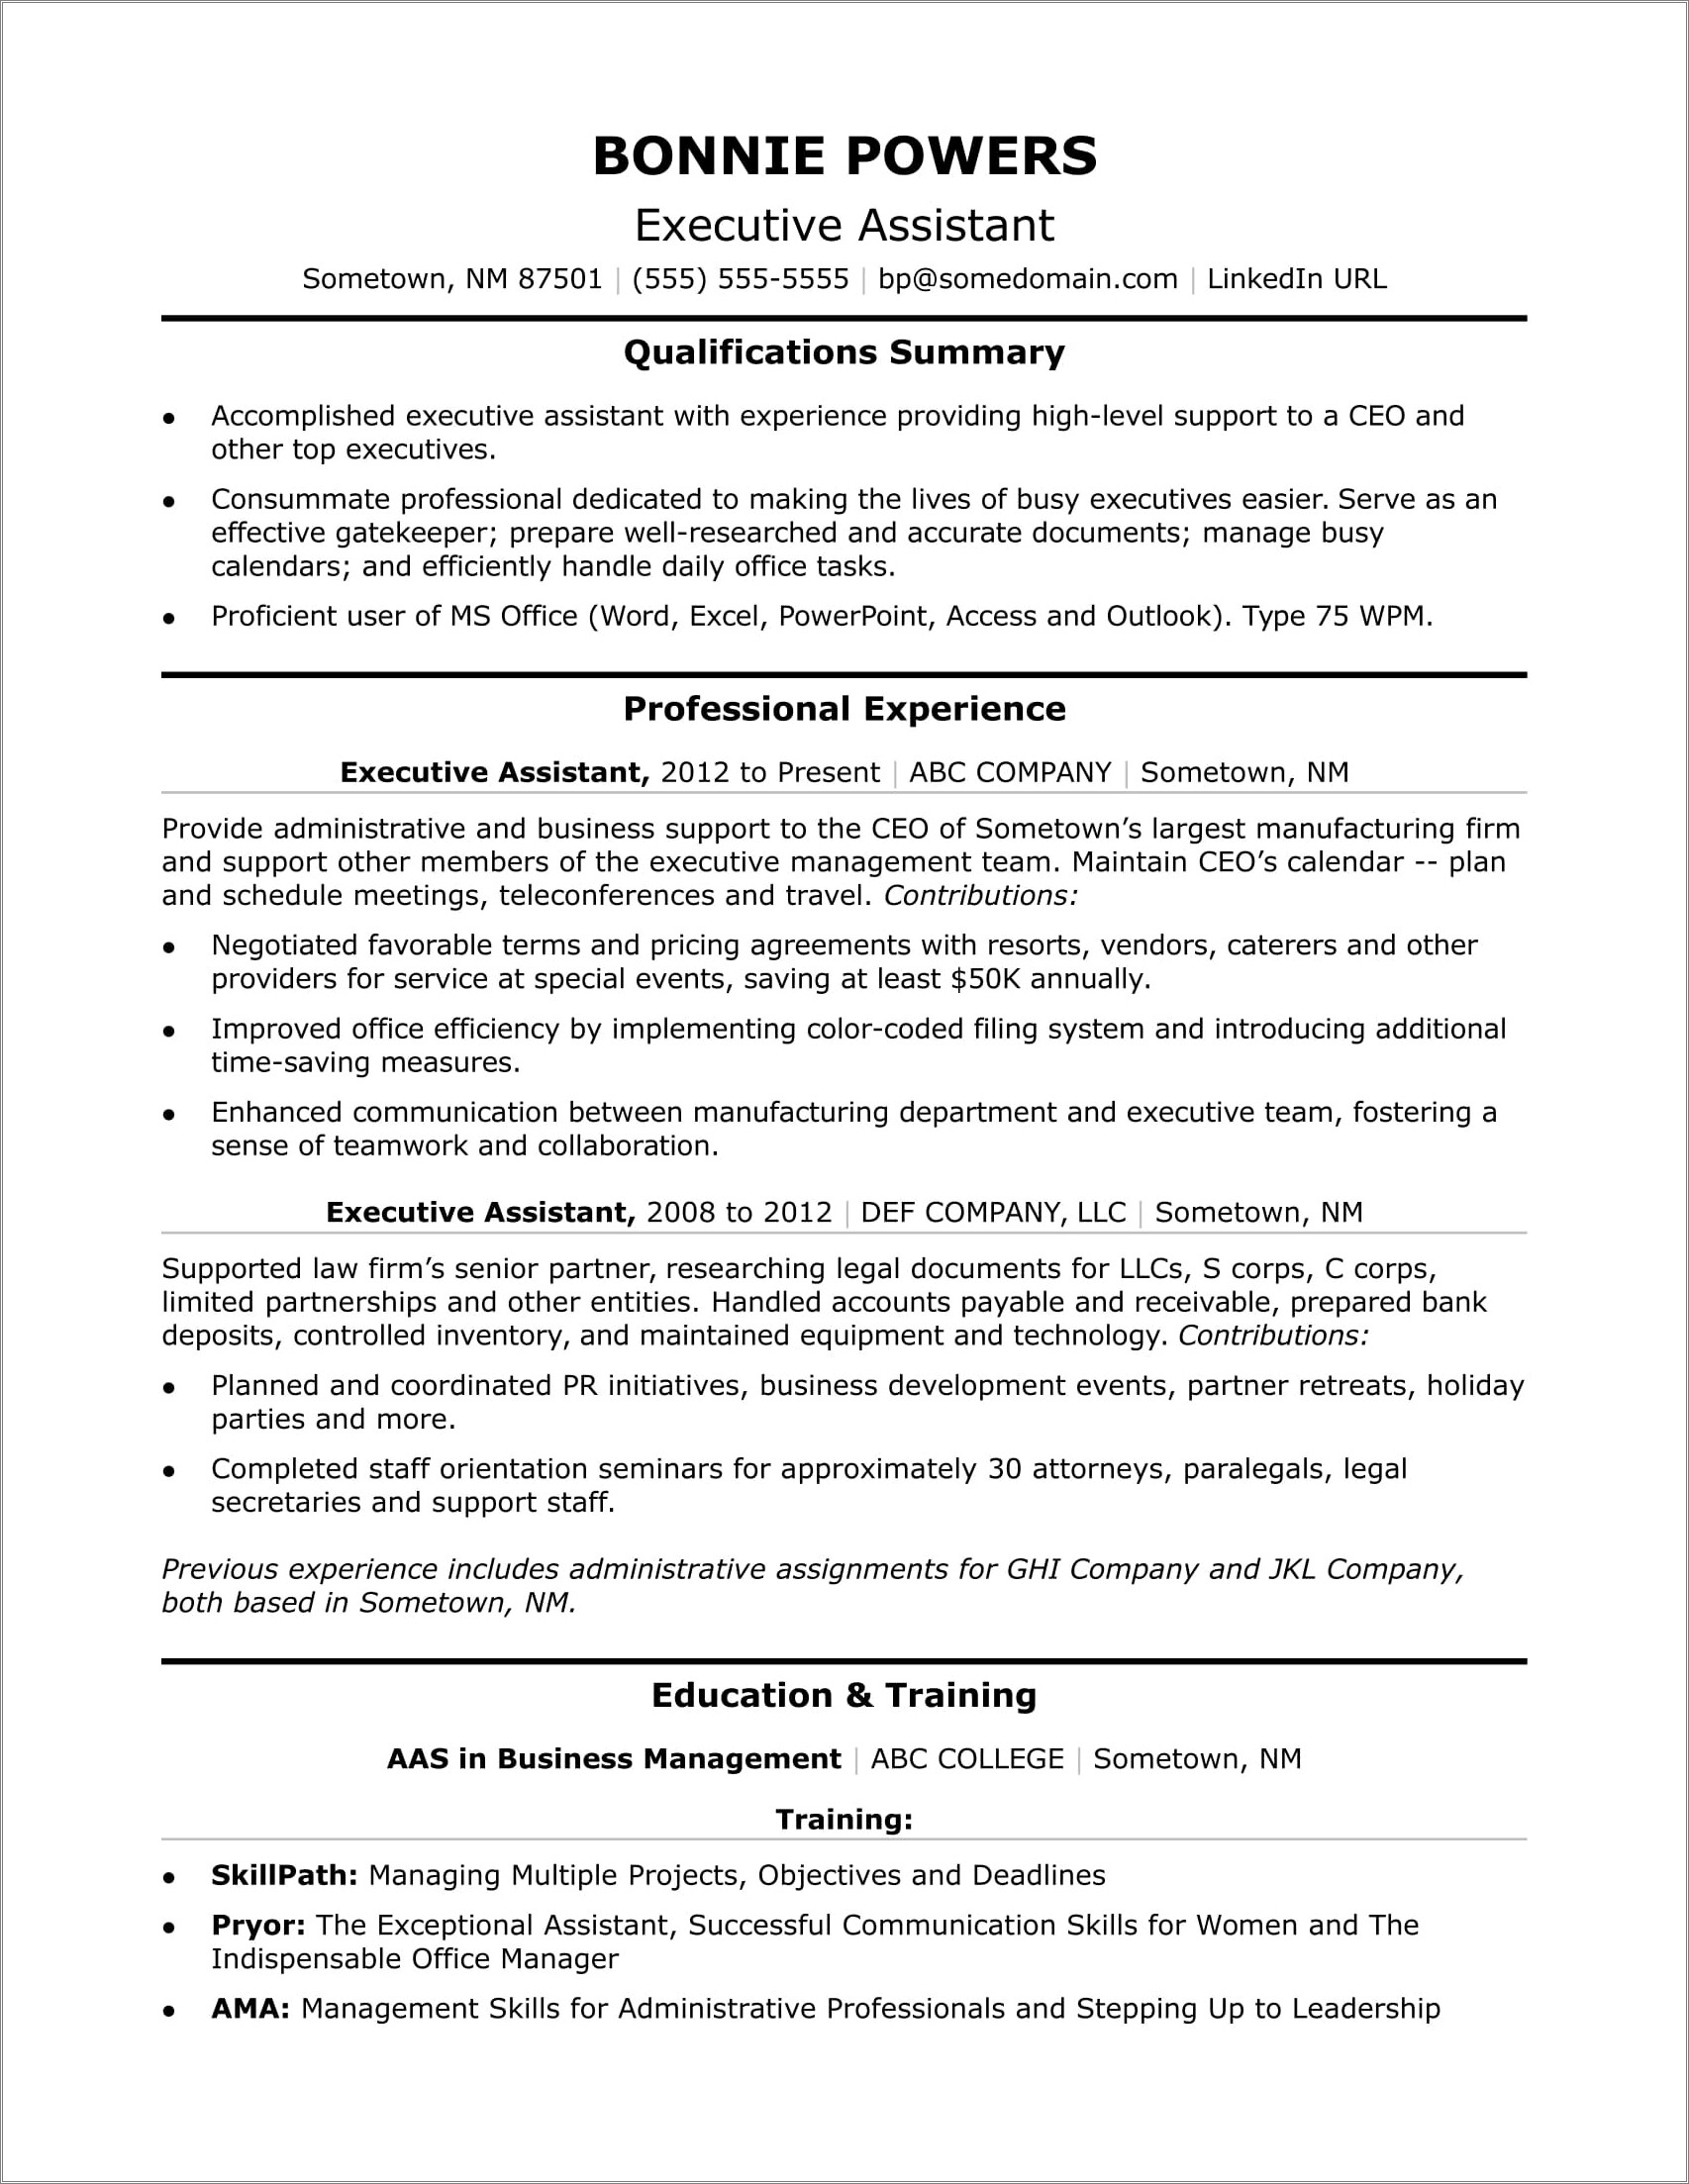 Office Assistant Job Description Resume Sample